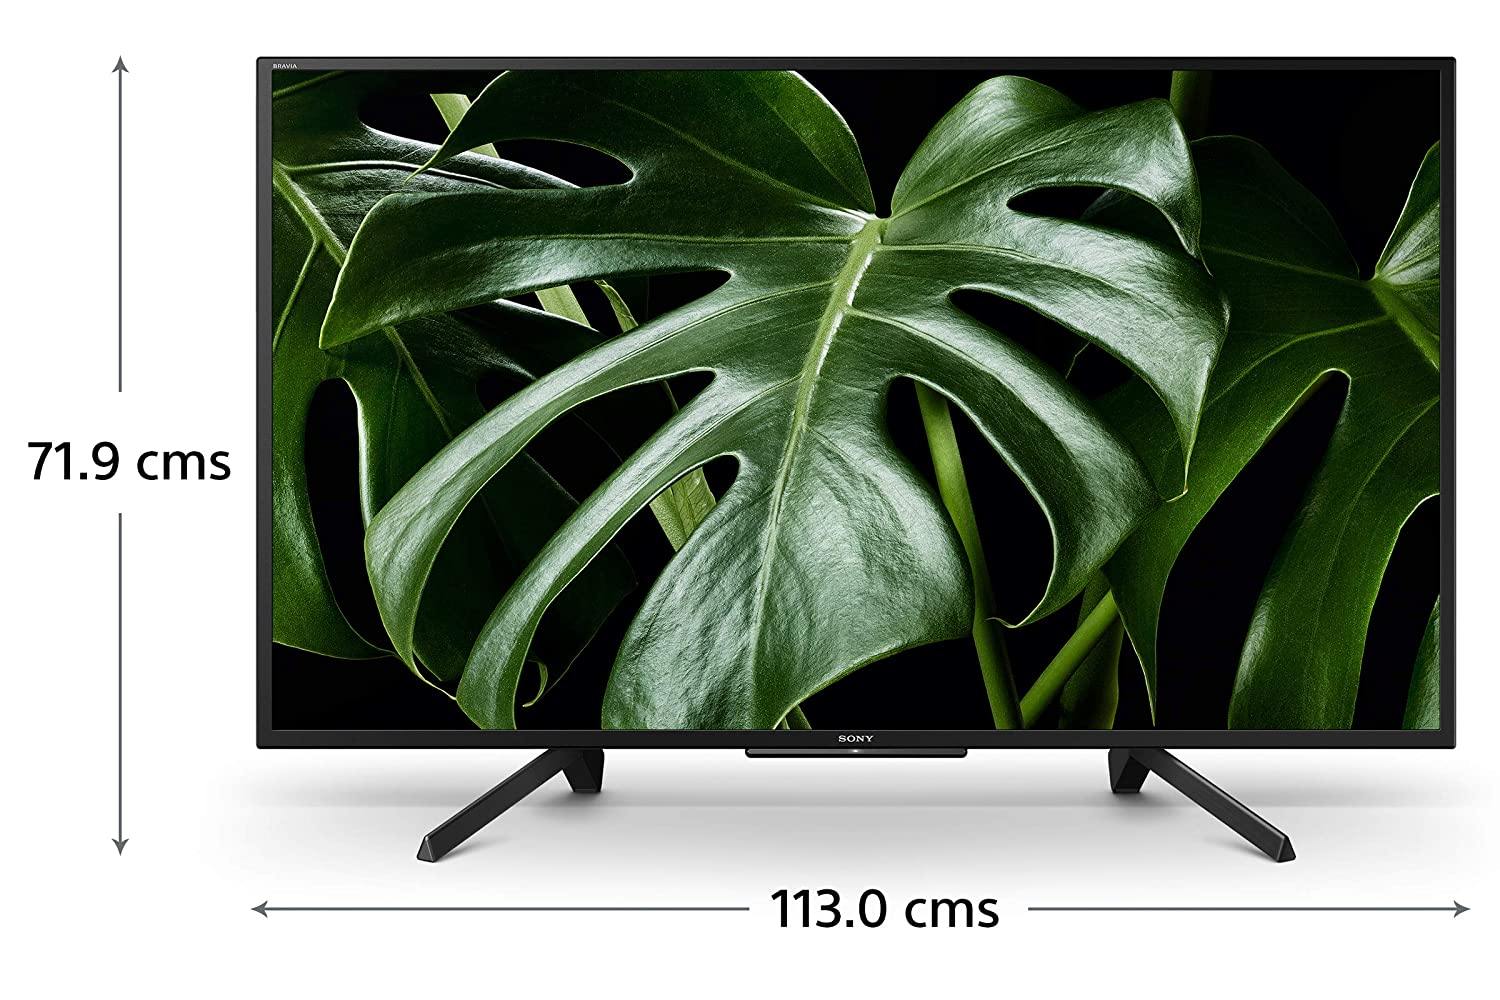 Sony Bravia 125.7 cm (50 inches) Full HD LED Smart TV KLV-50W672G (Black) (2019 Model) - Mahajan Electronics Online